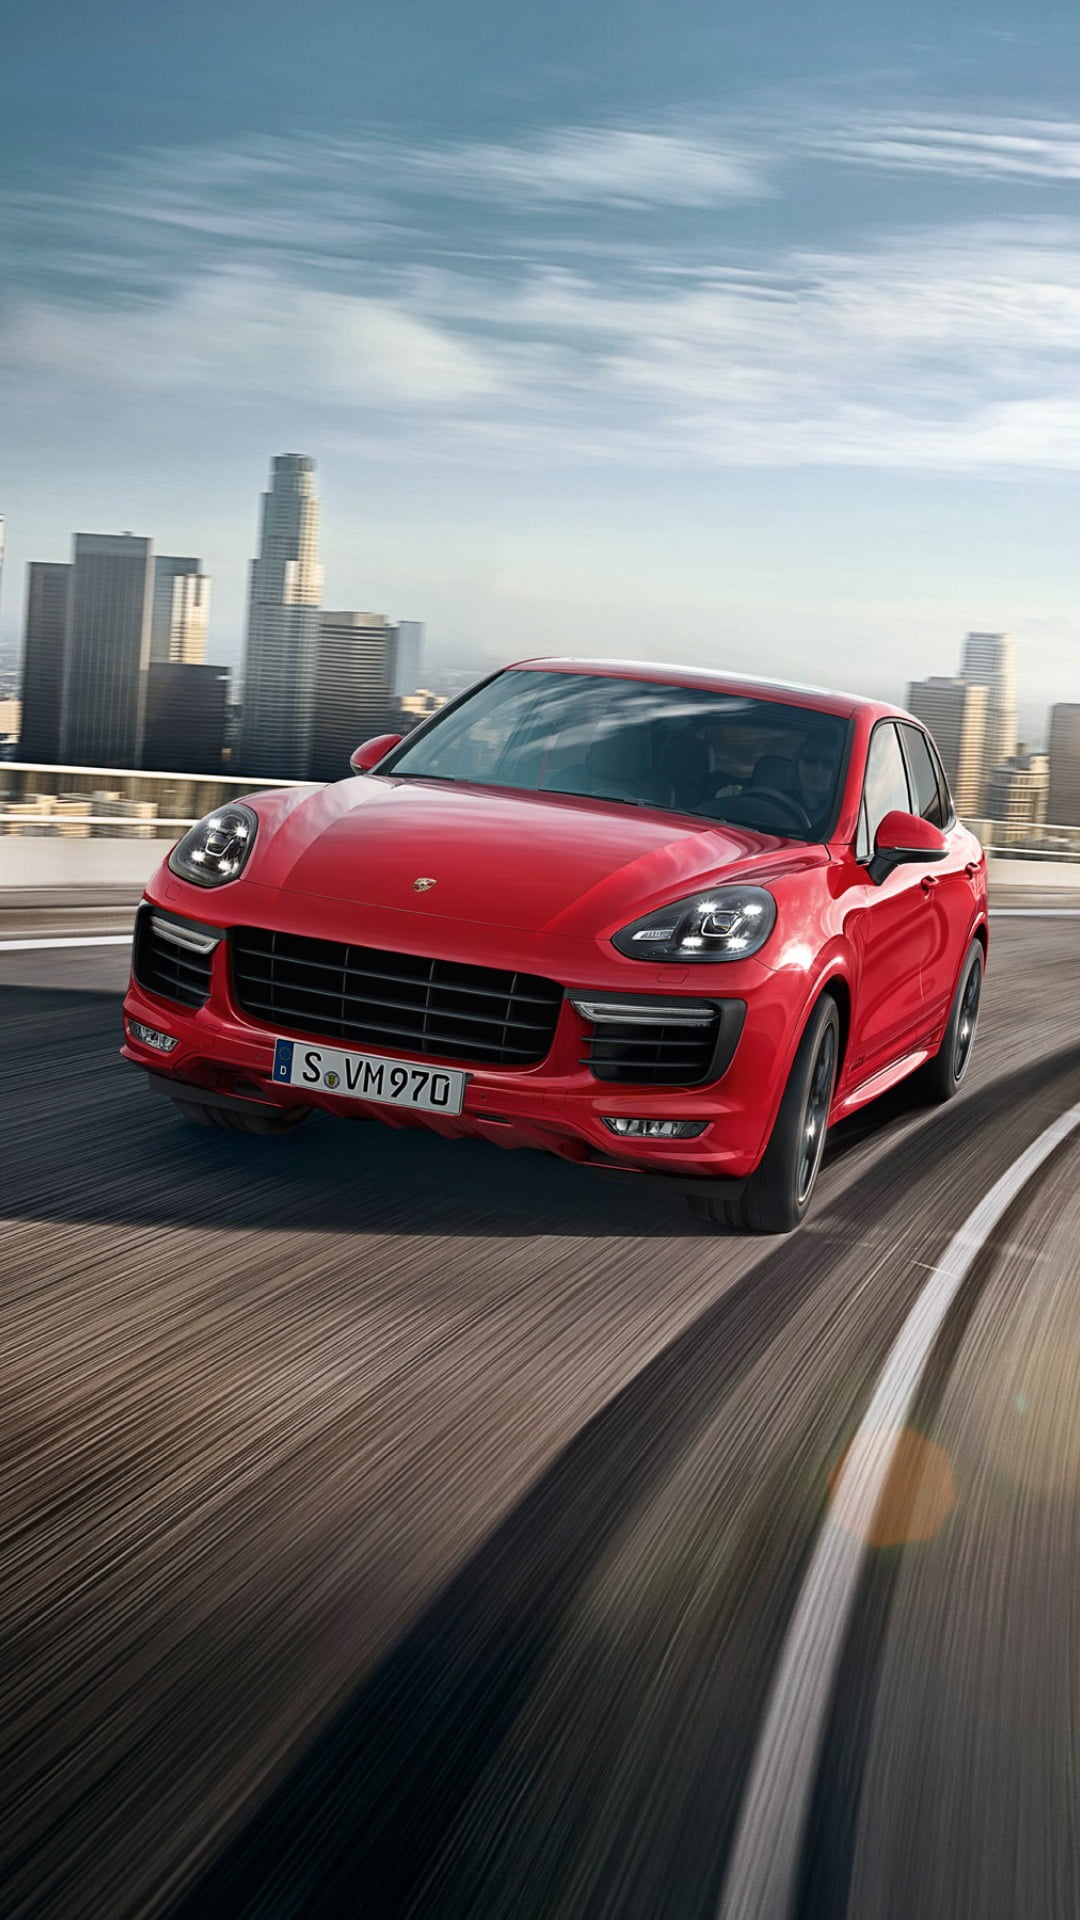 Porsche Cayenne V6 2015, red Ferrari car, Cars, speed, motor vehicle